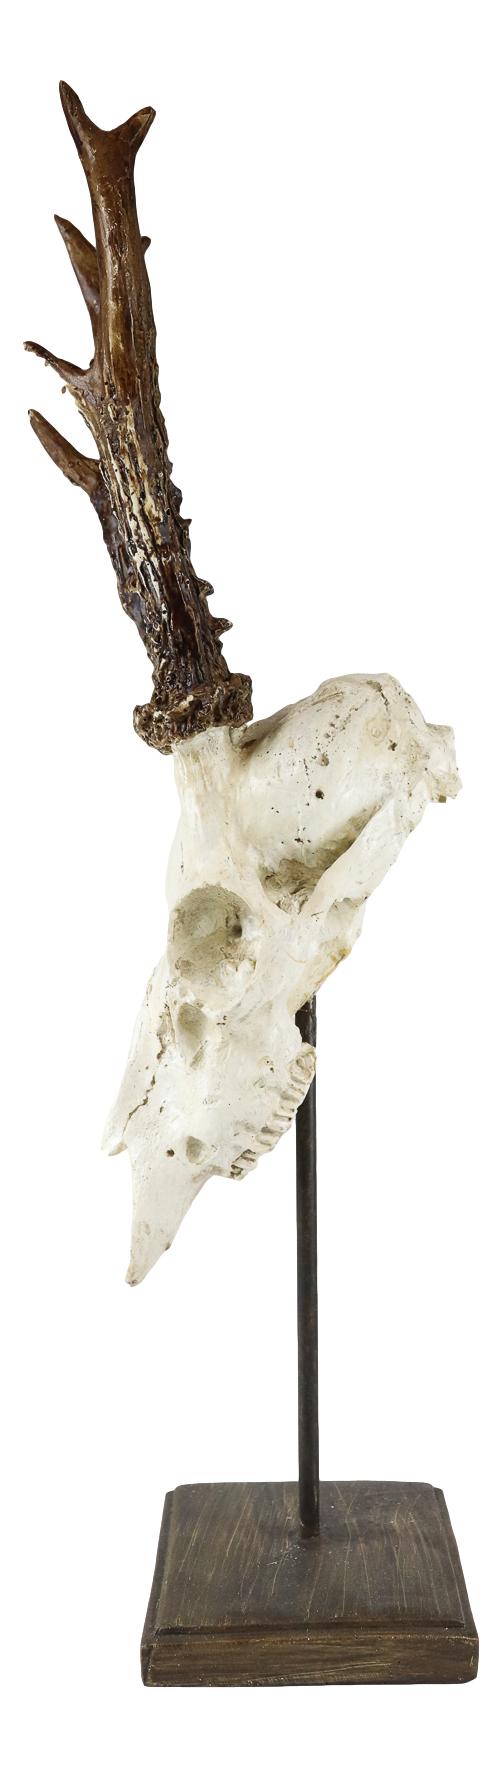 Large 15"H Rustic Roe Deer Buck Head Skull On Museum Pole Stand Base Figurine